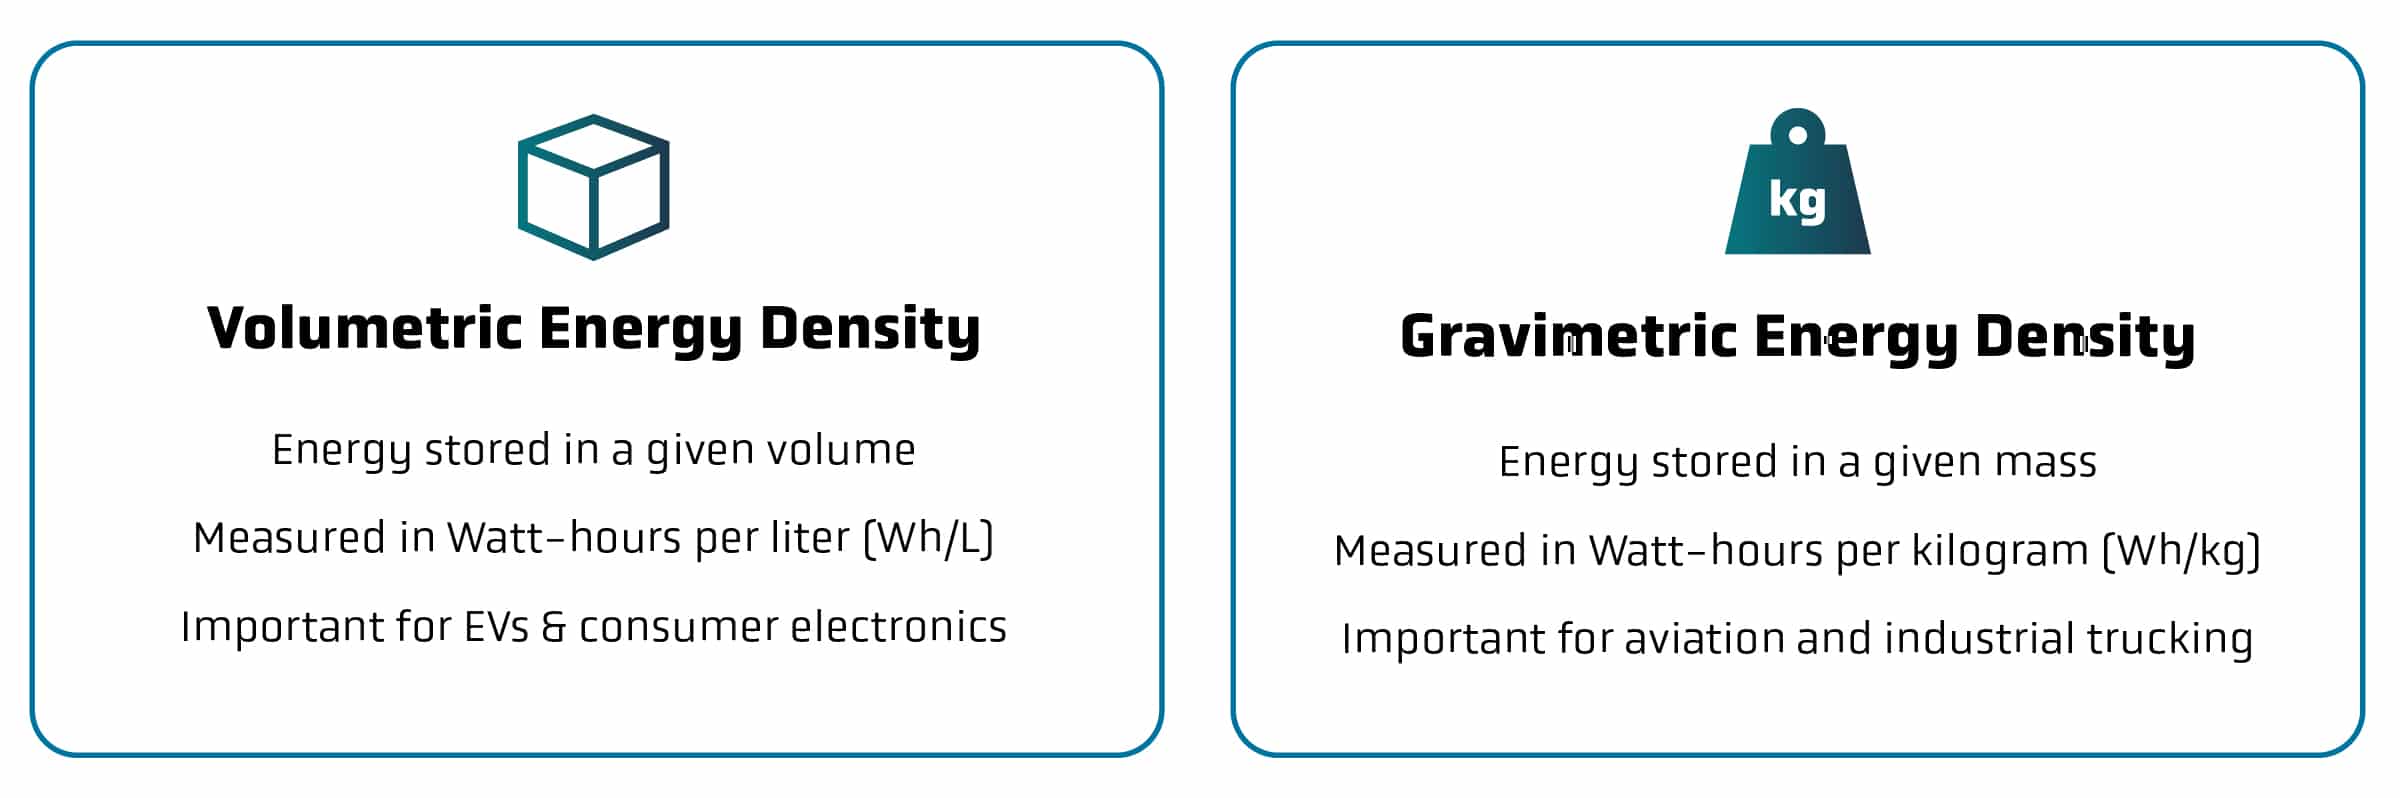 Graphic comparing volumetric vs gravimetric energy density.